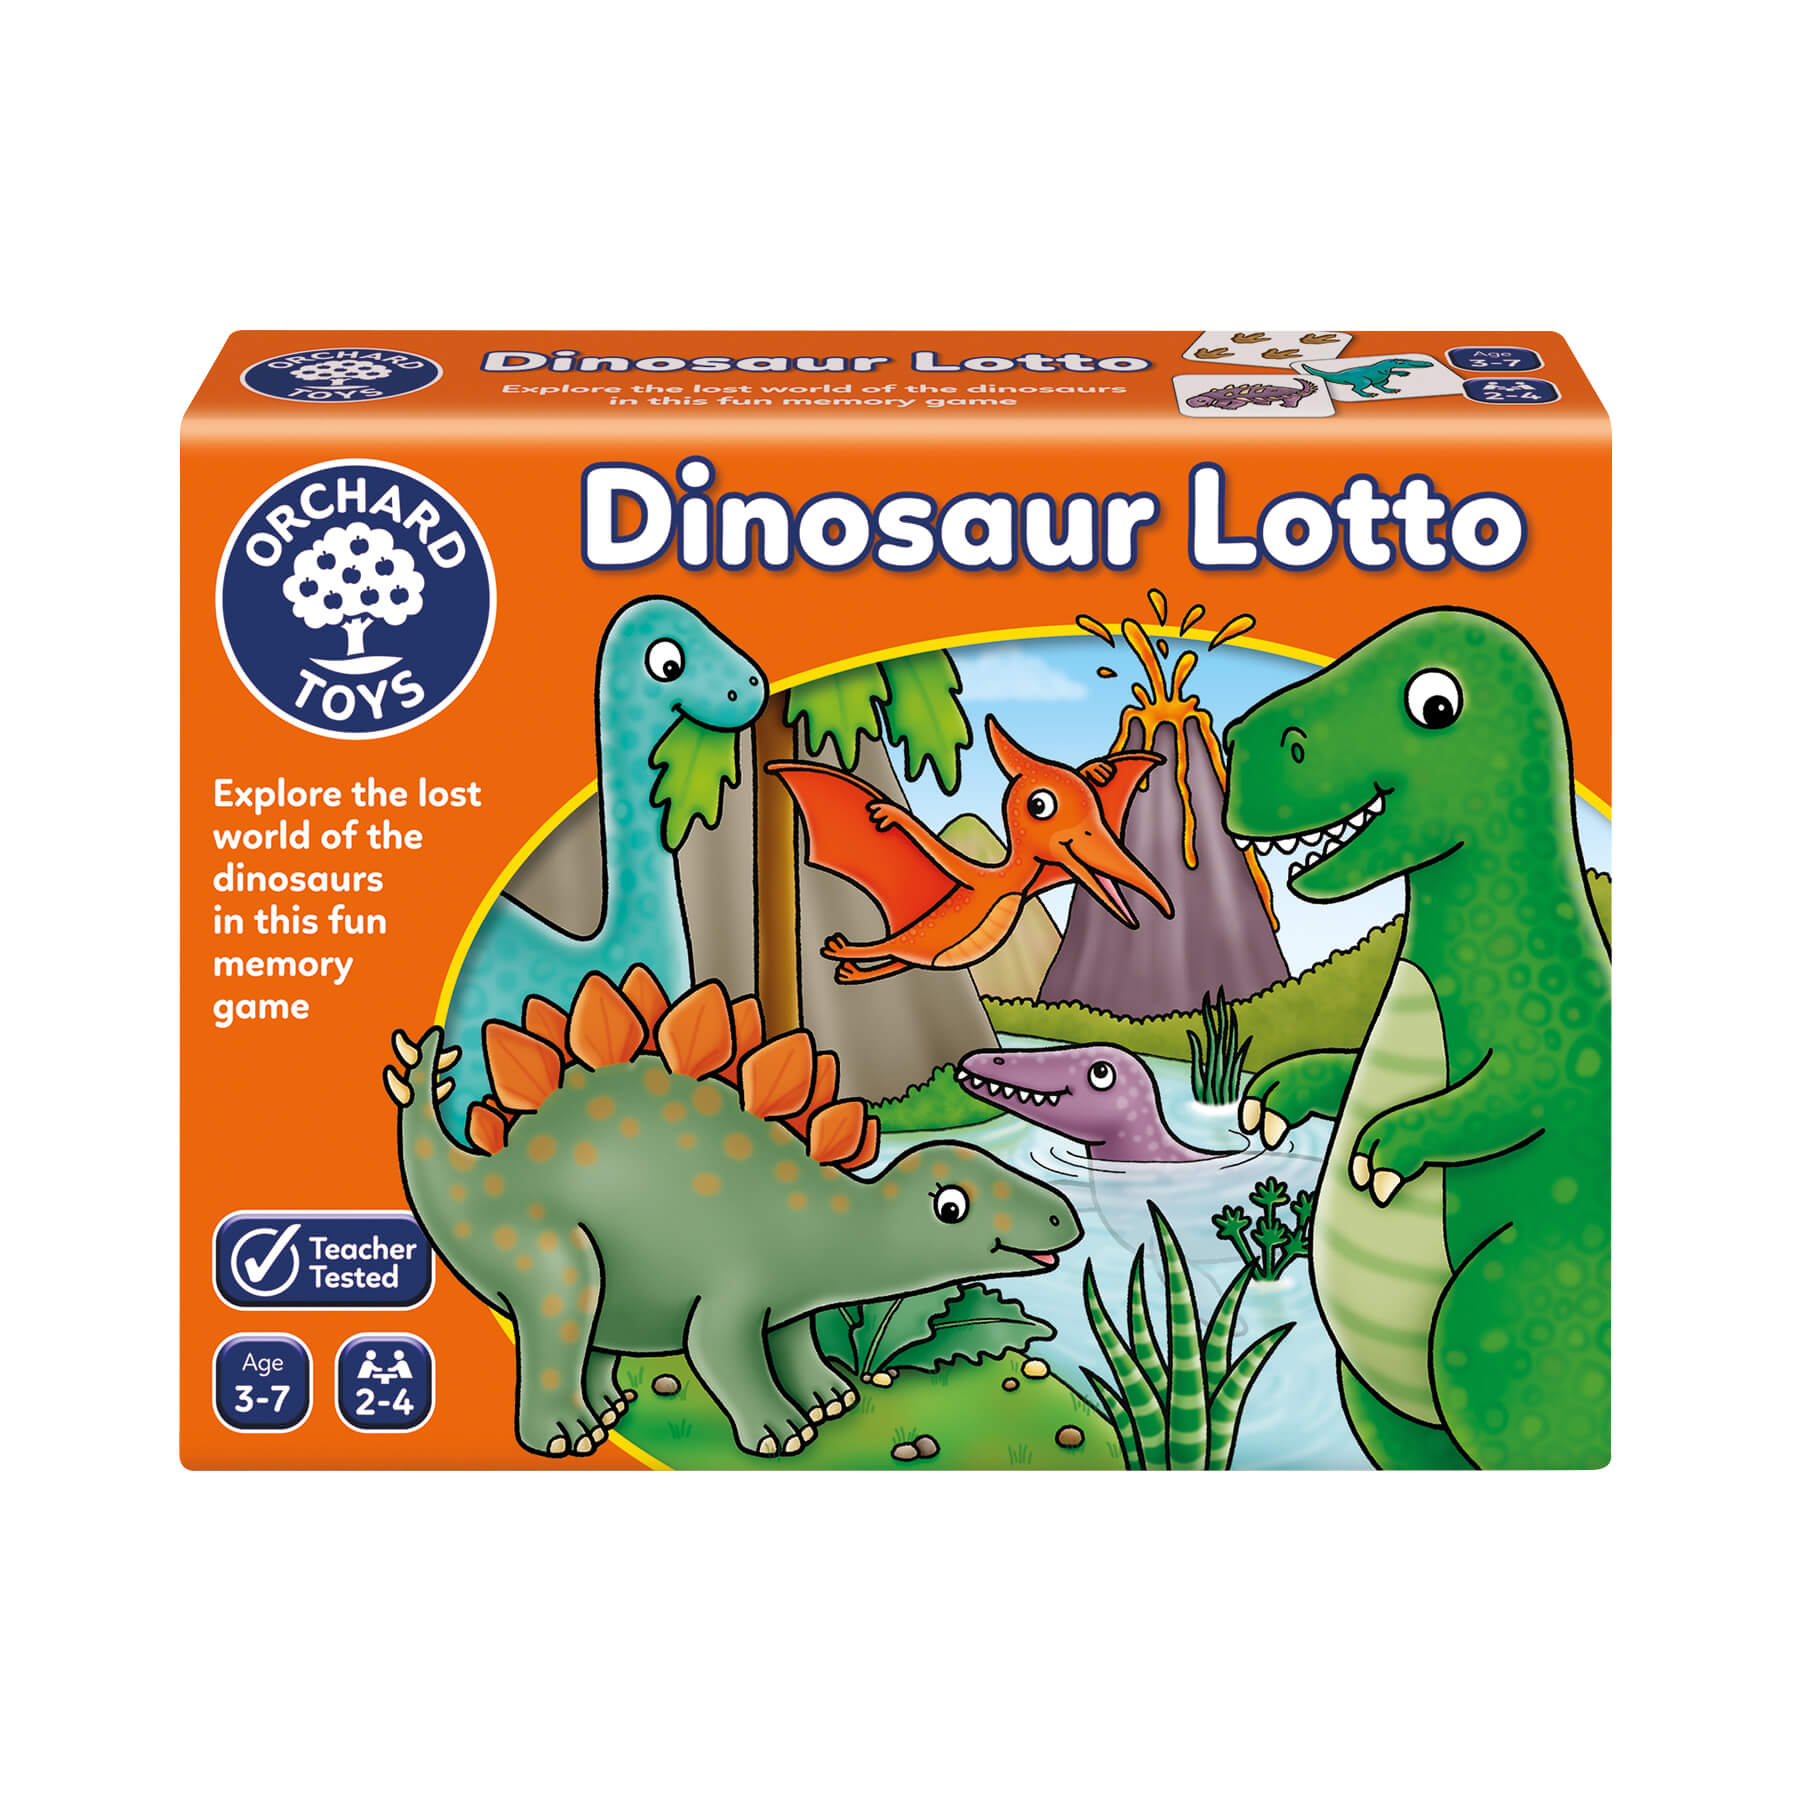 Dinosaur lotto - dinosaur board game - orchard toys